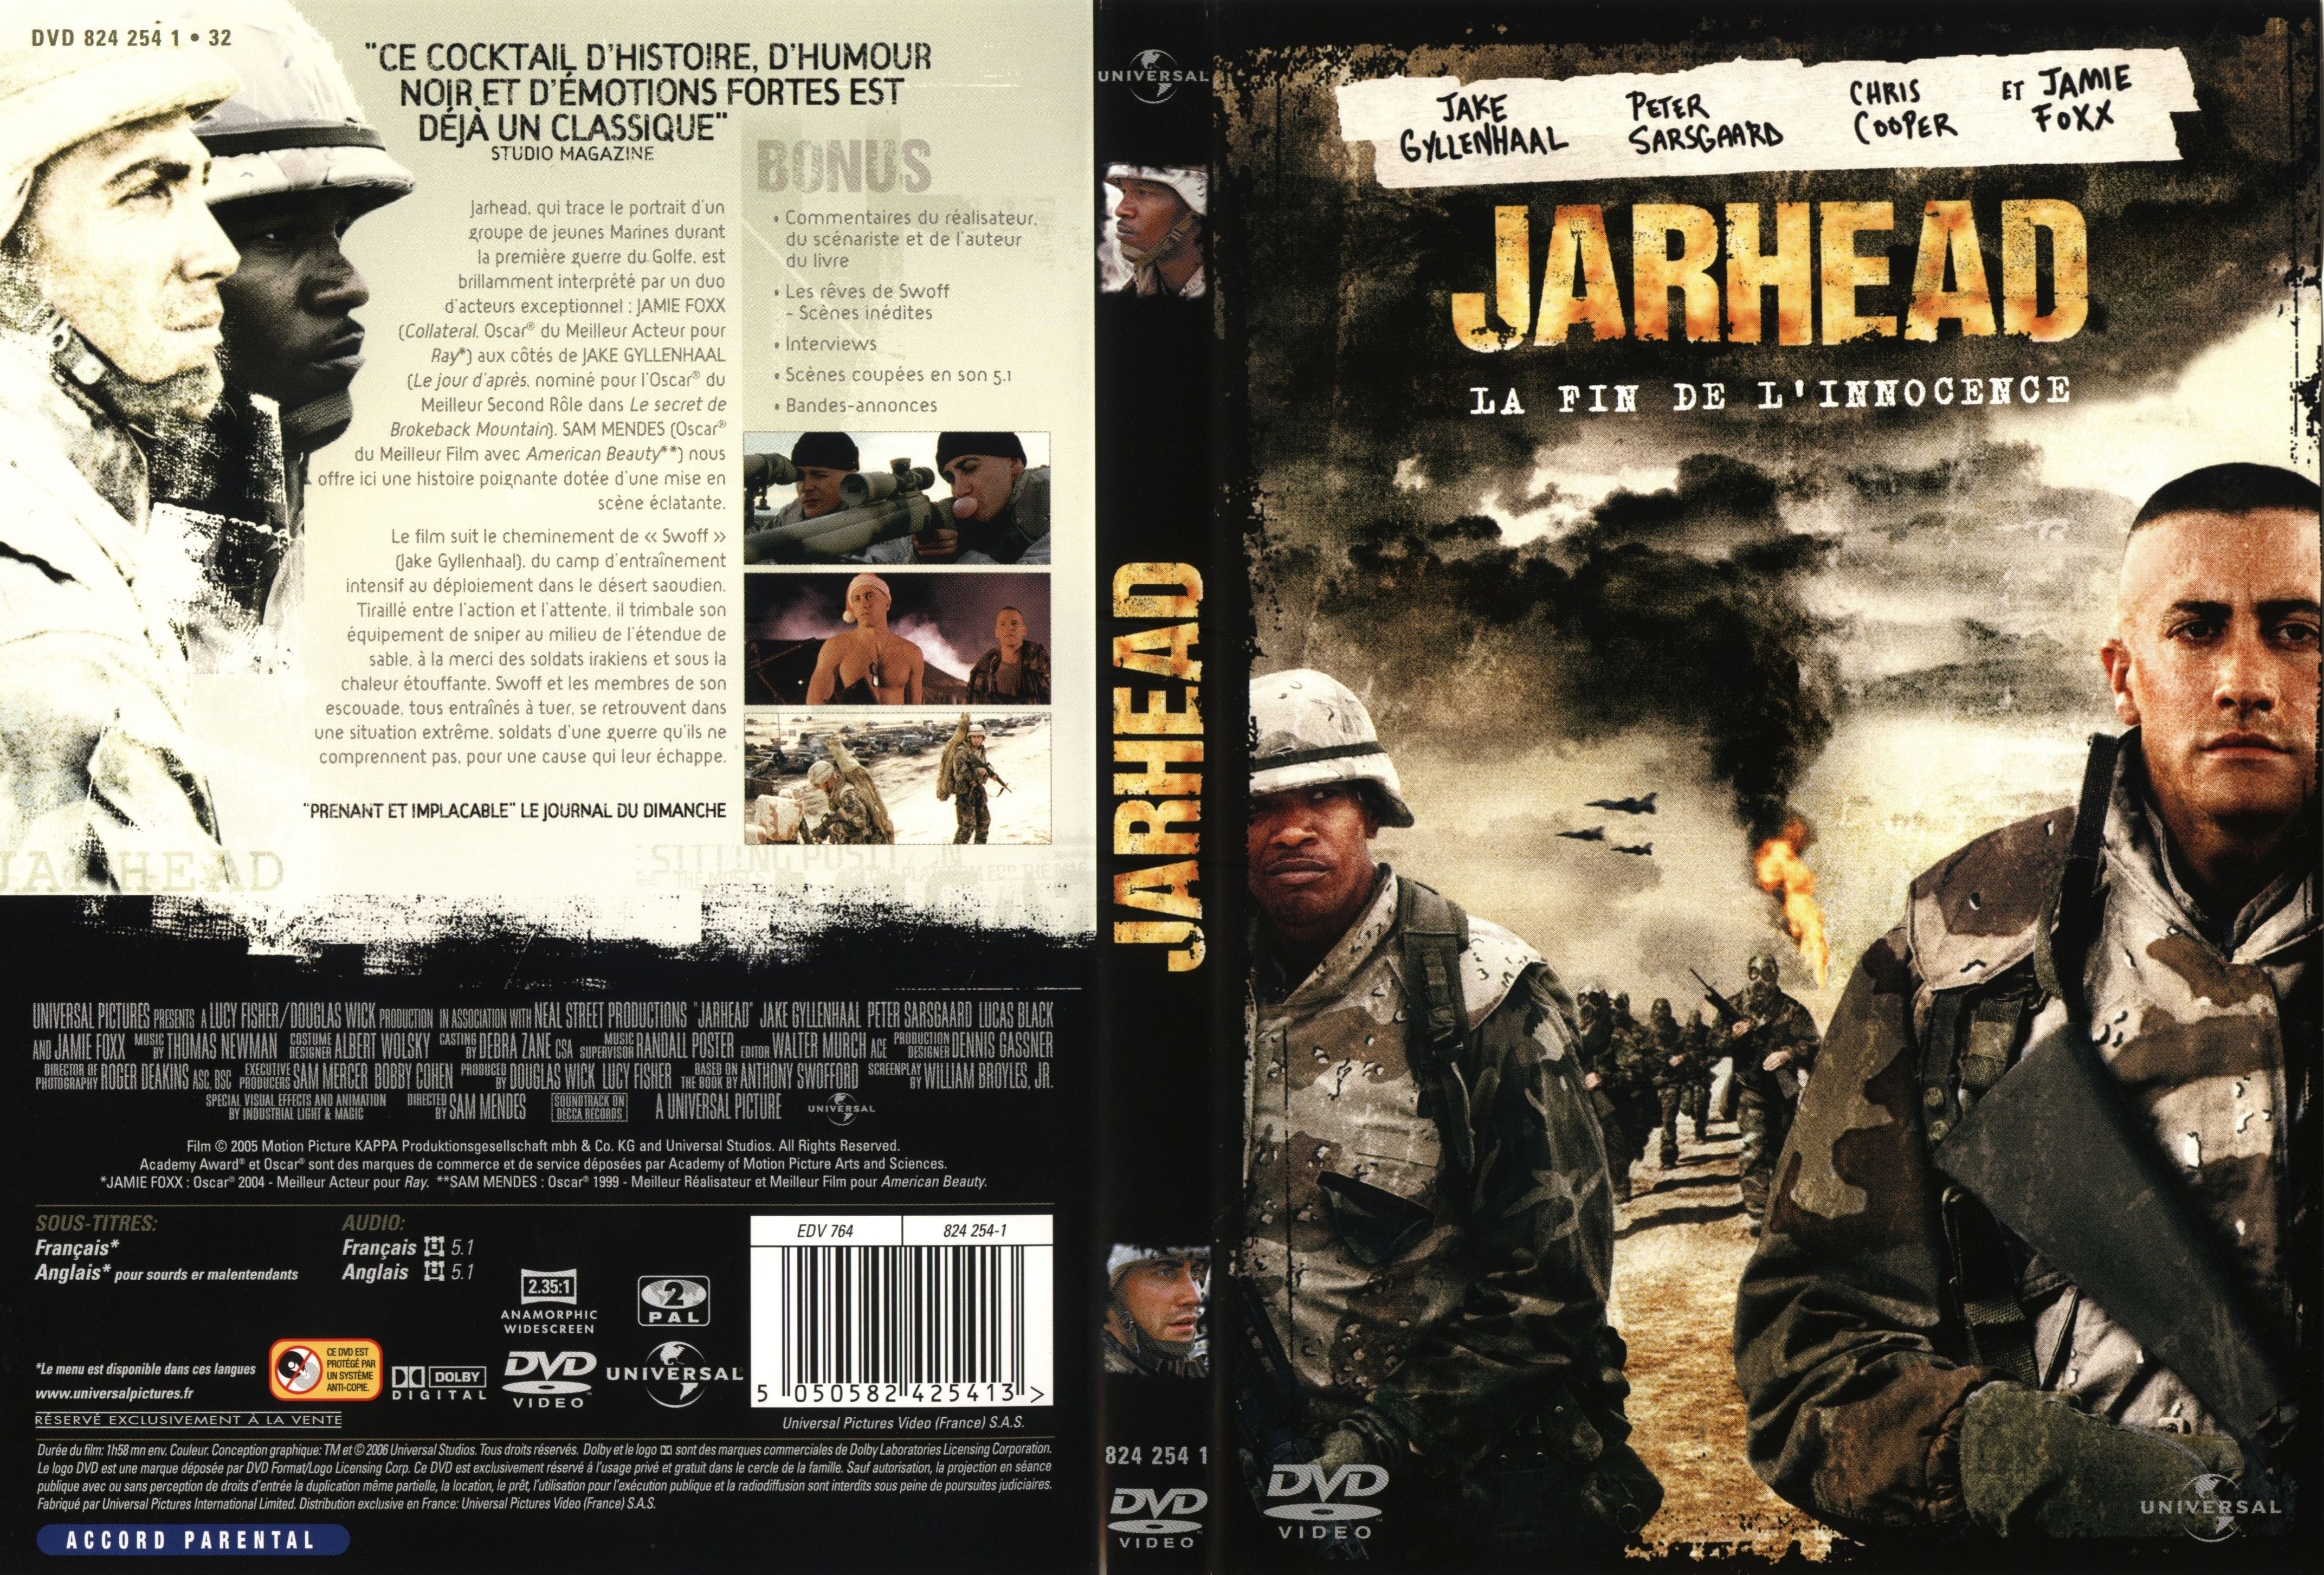 Jaquette DVD Jarhead